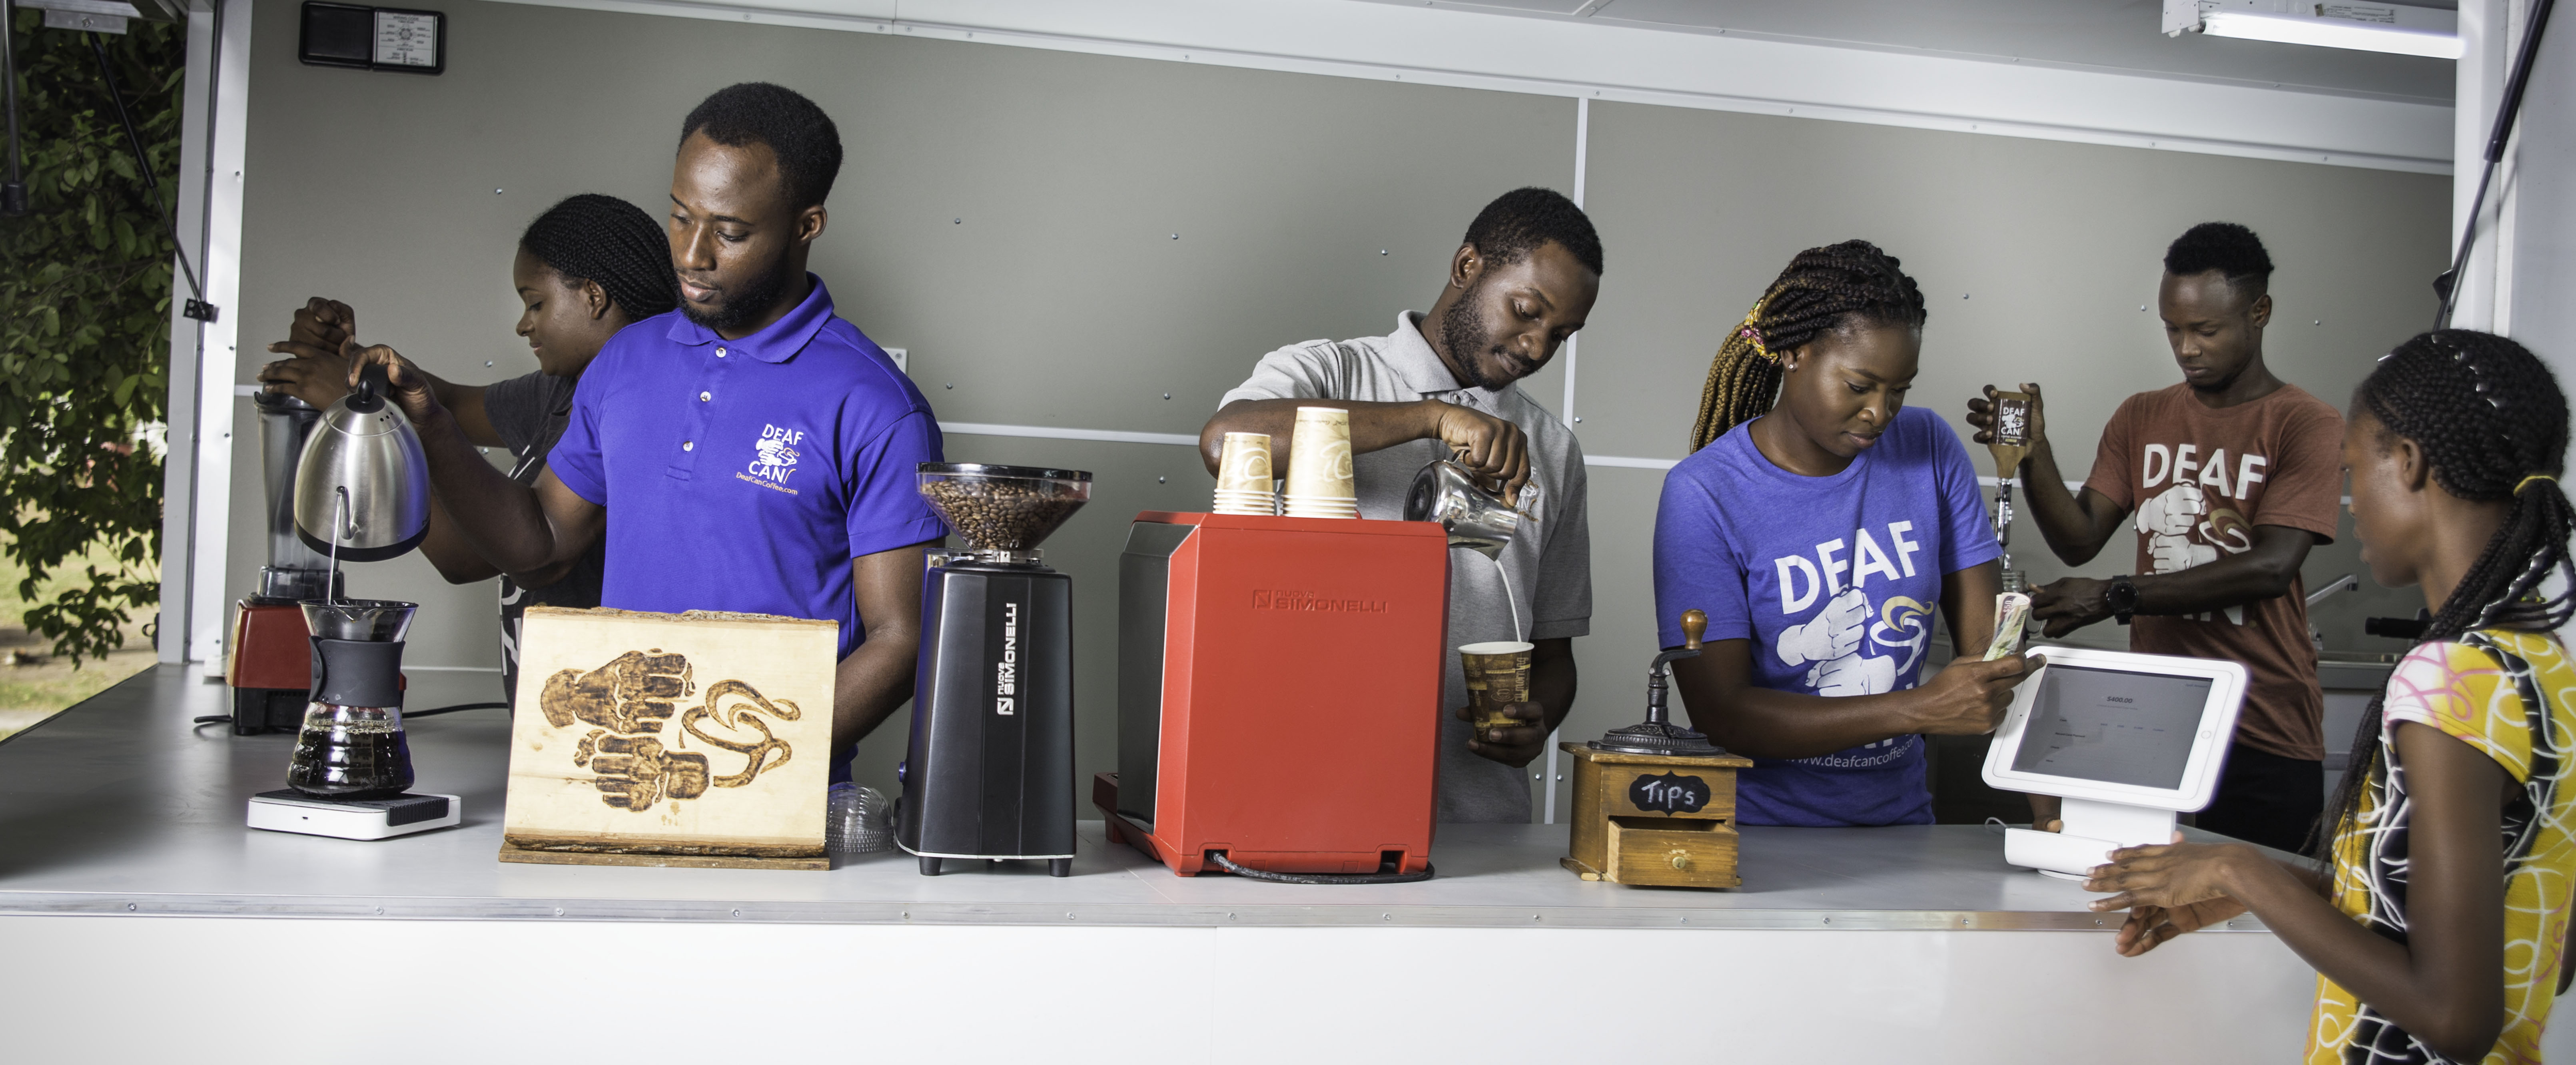 Deaf Can Coffee Jamaica